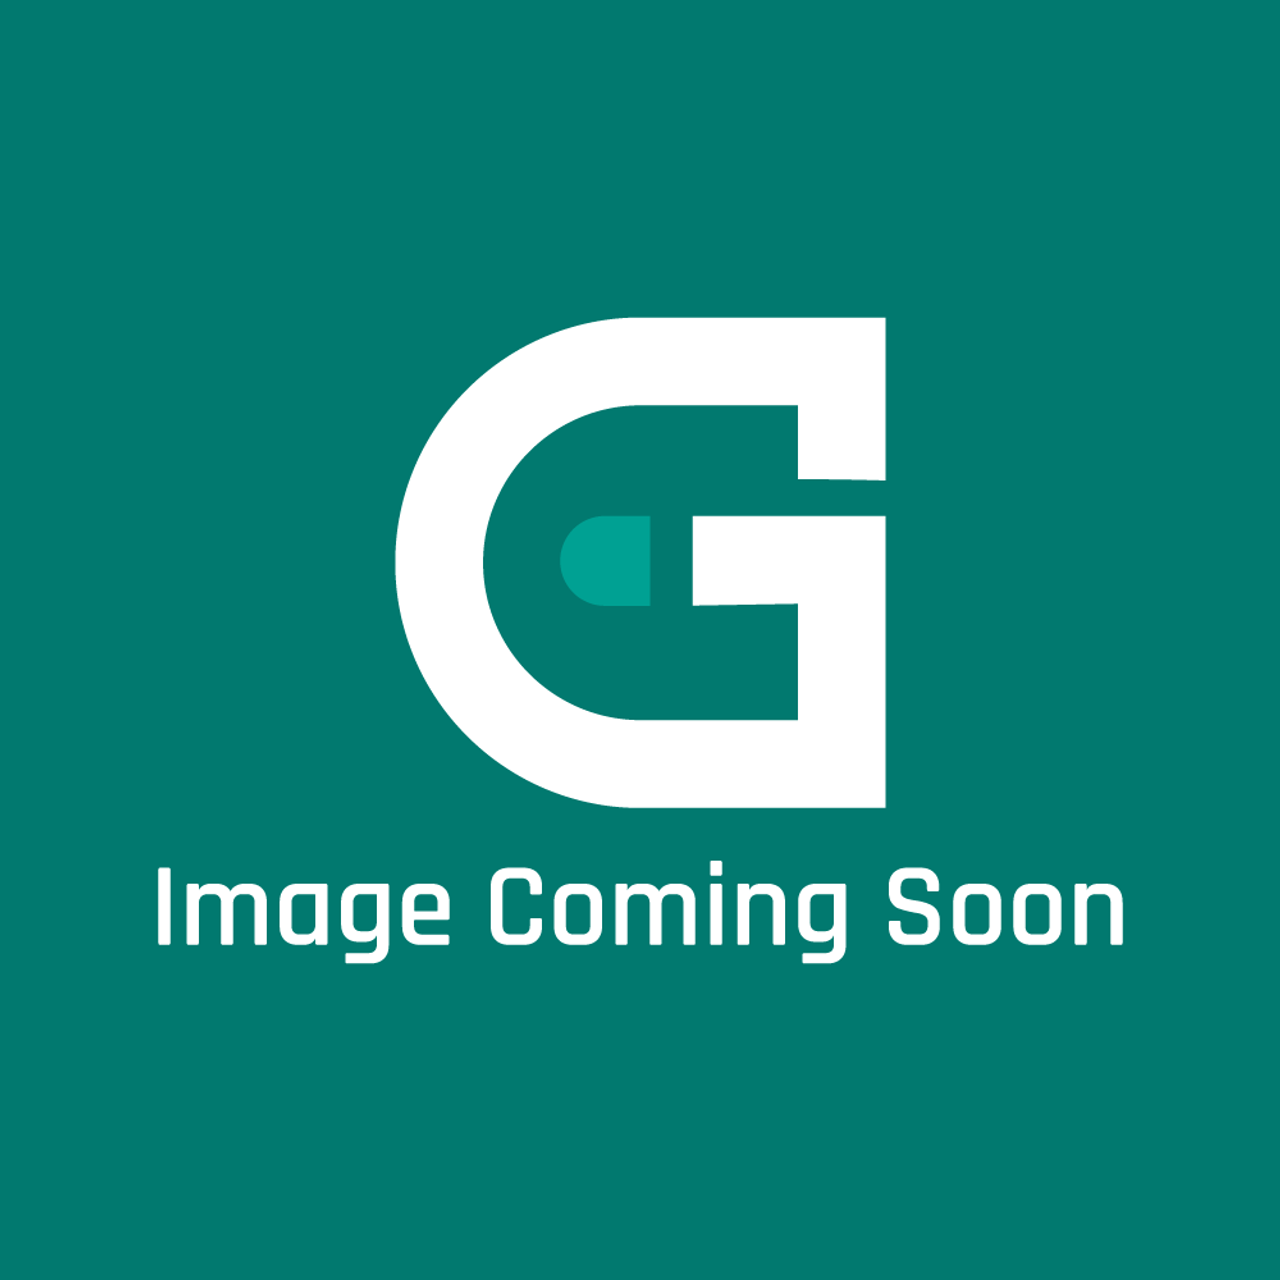 AGA Marvel RS4F46-93 - Firebrick 46-93 1 Np R&L Reg - Image Coming Soon!